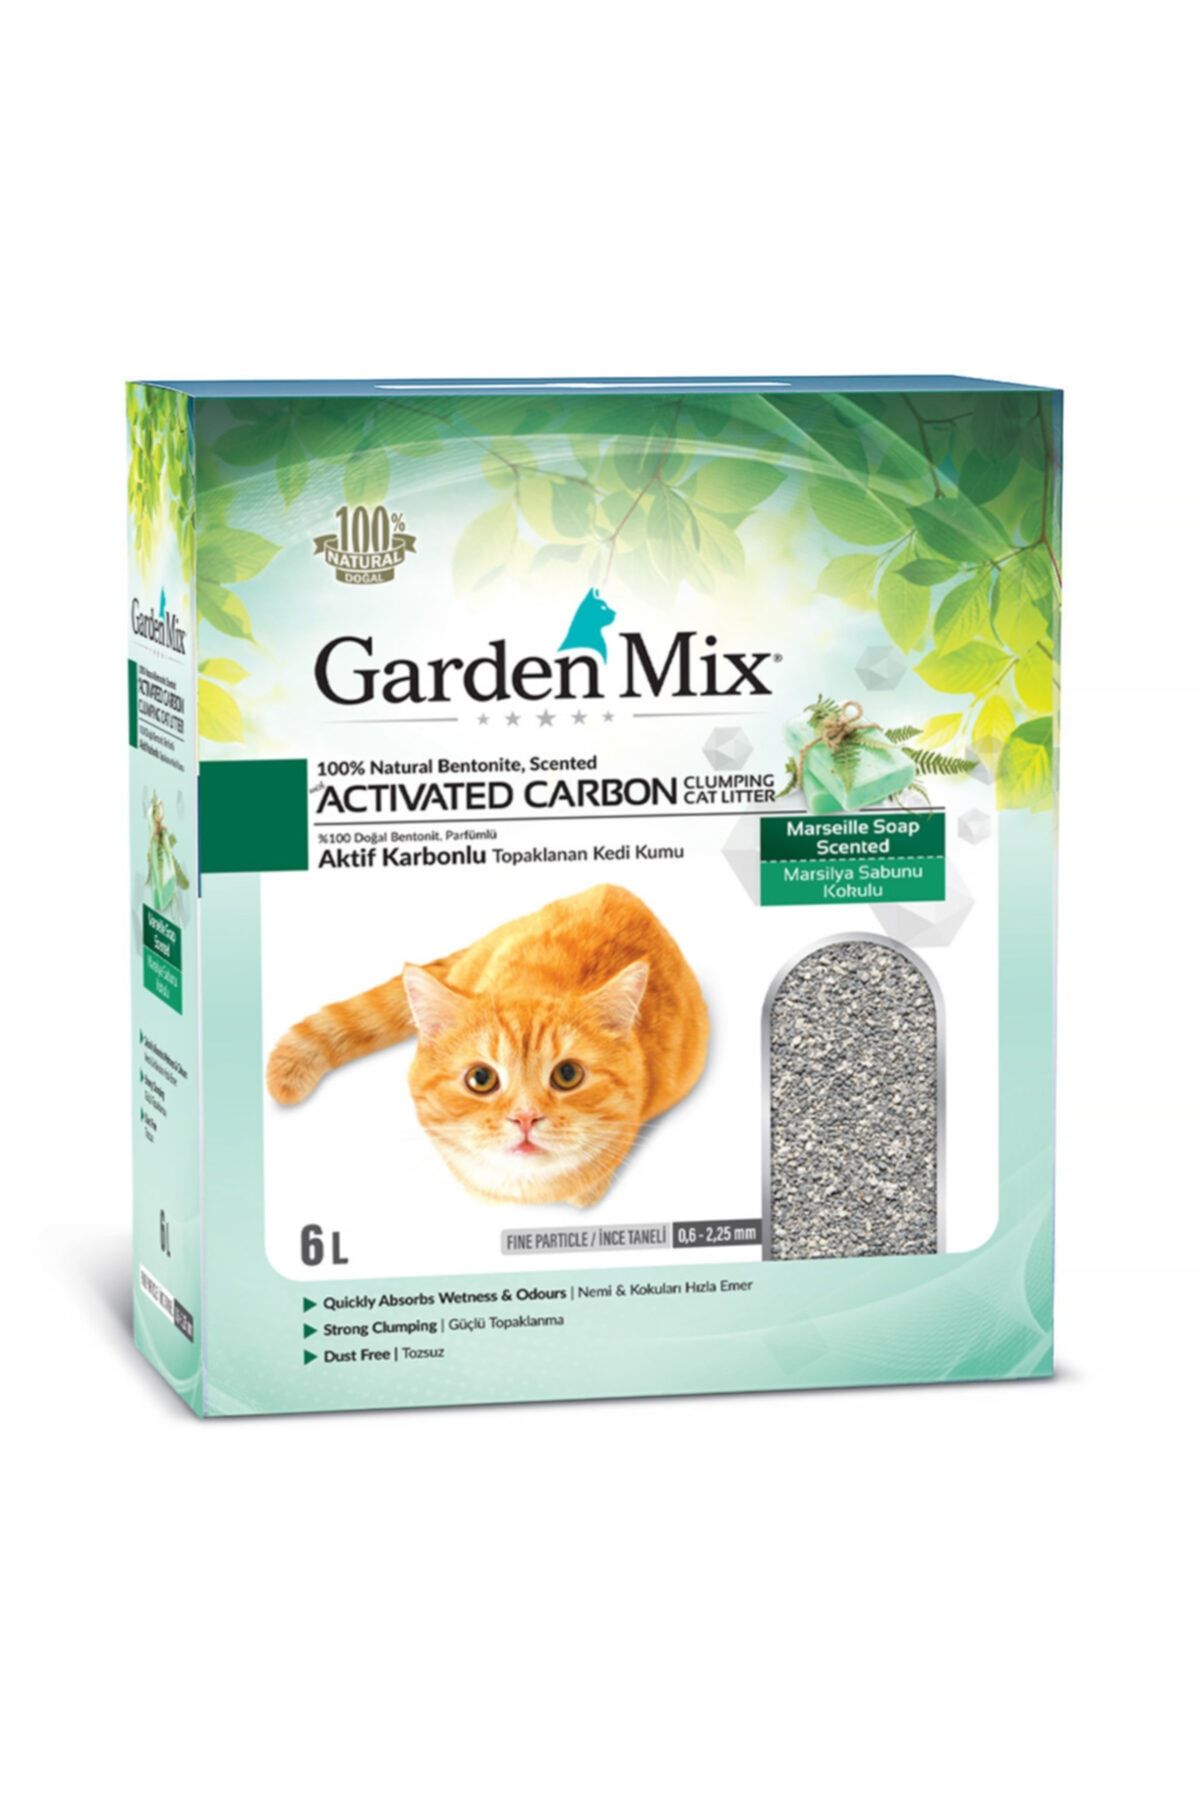 Gardenmix Garden Mix Aktif Karbonlu Sabun Kokulu Kedi Kumu 6 Lt